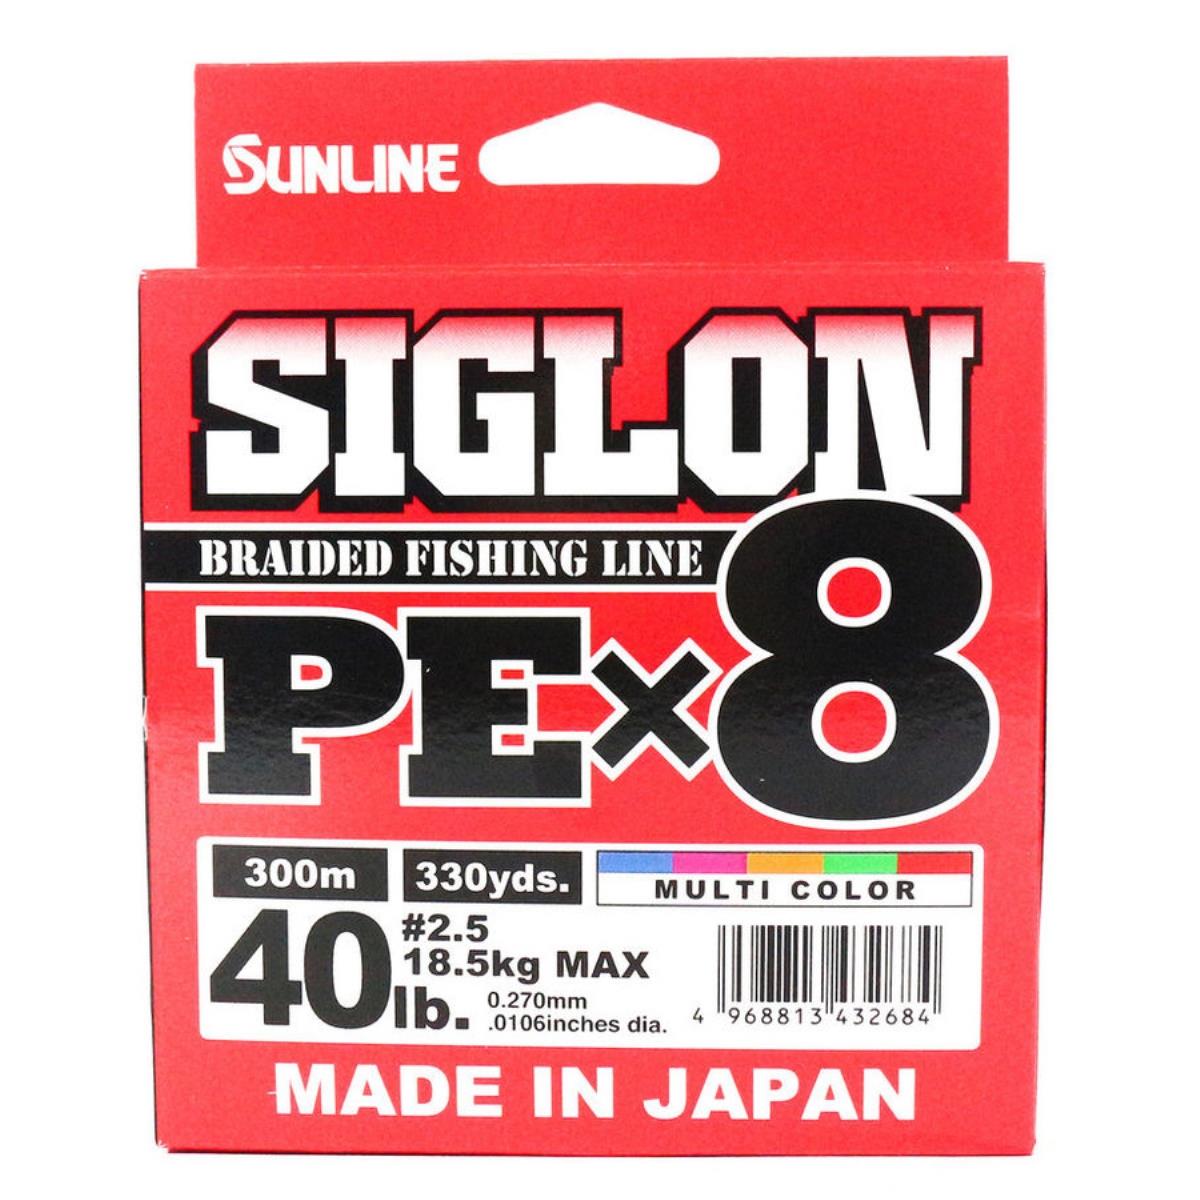 Шнур SIGLON PE×8 150M (Multikolor 5C) Sunline шнур для вязания 100% полиэфир 1мм 200м 75±10гр 19 голубой